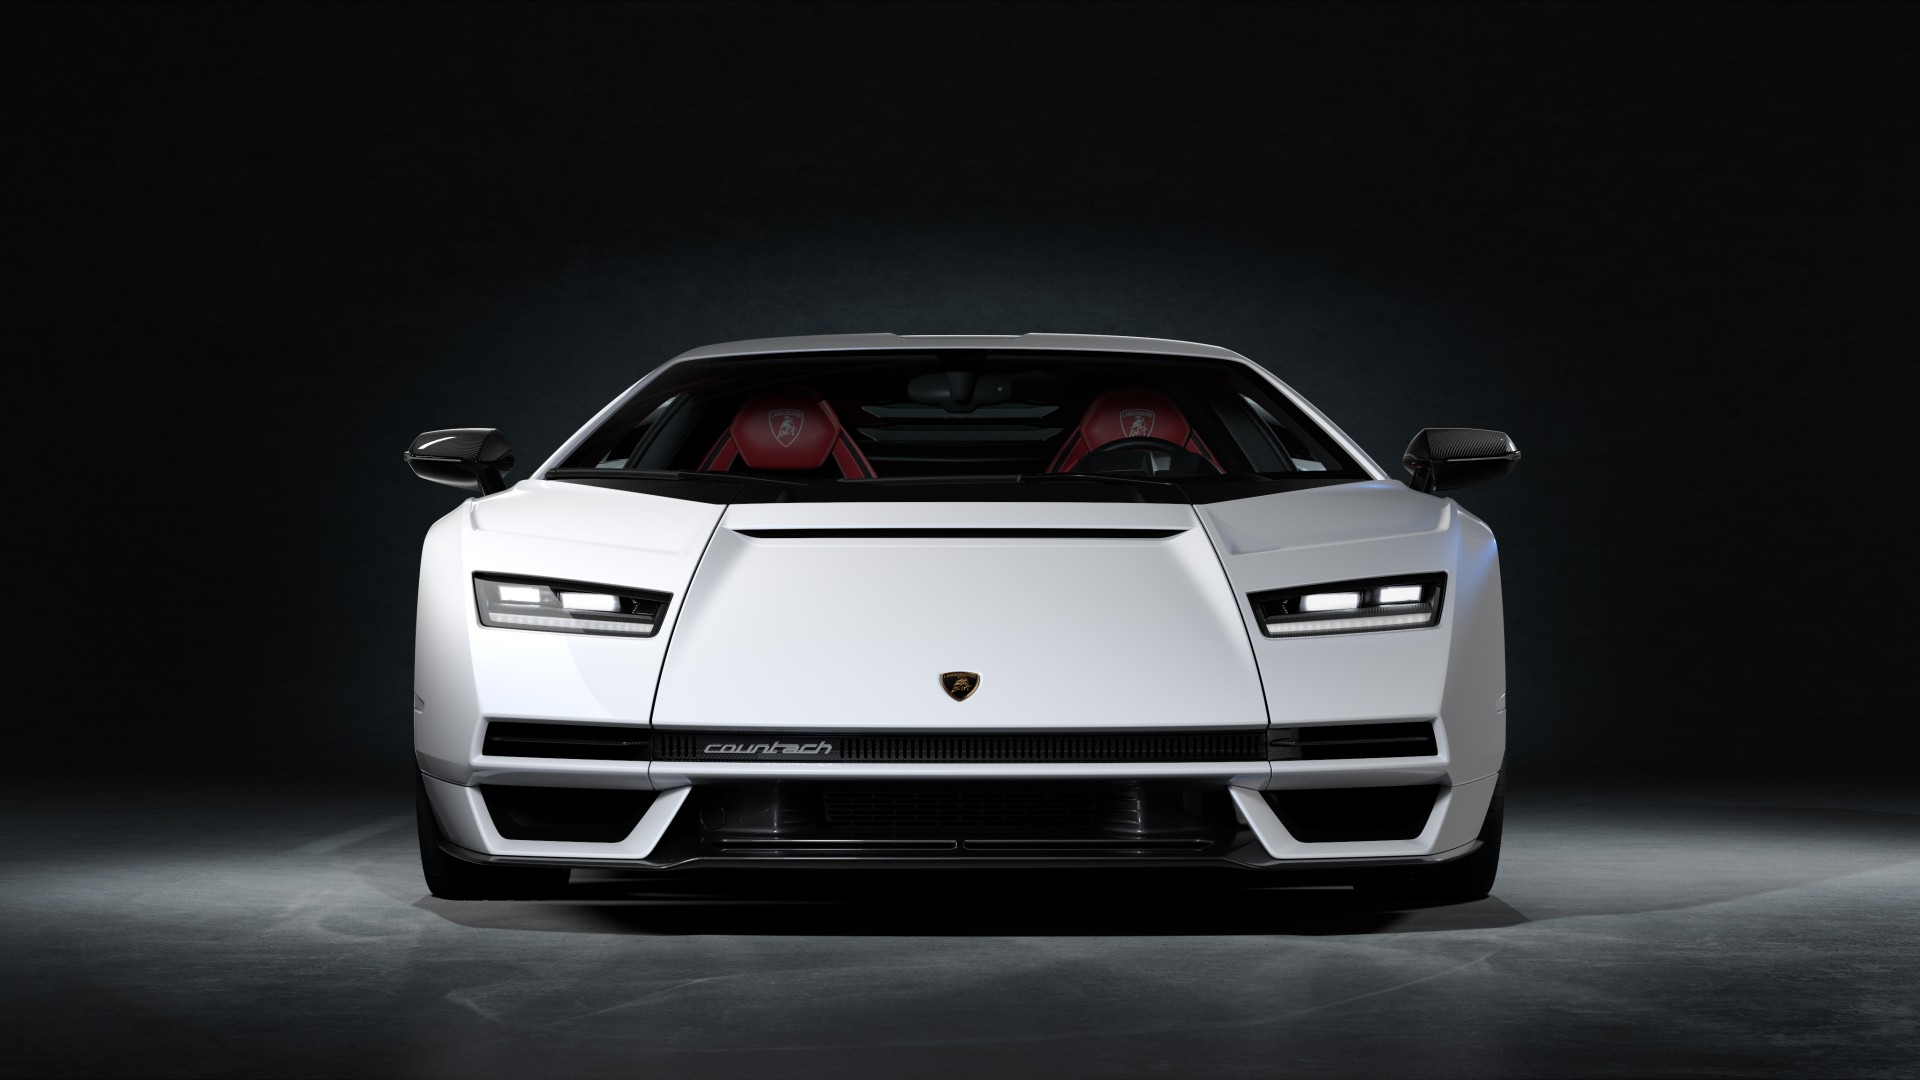 2022 Lamborghini Countach Lpi 800 4 4k Wallpaper Hd Car Wallpapers